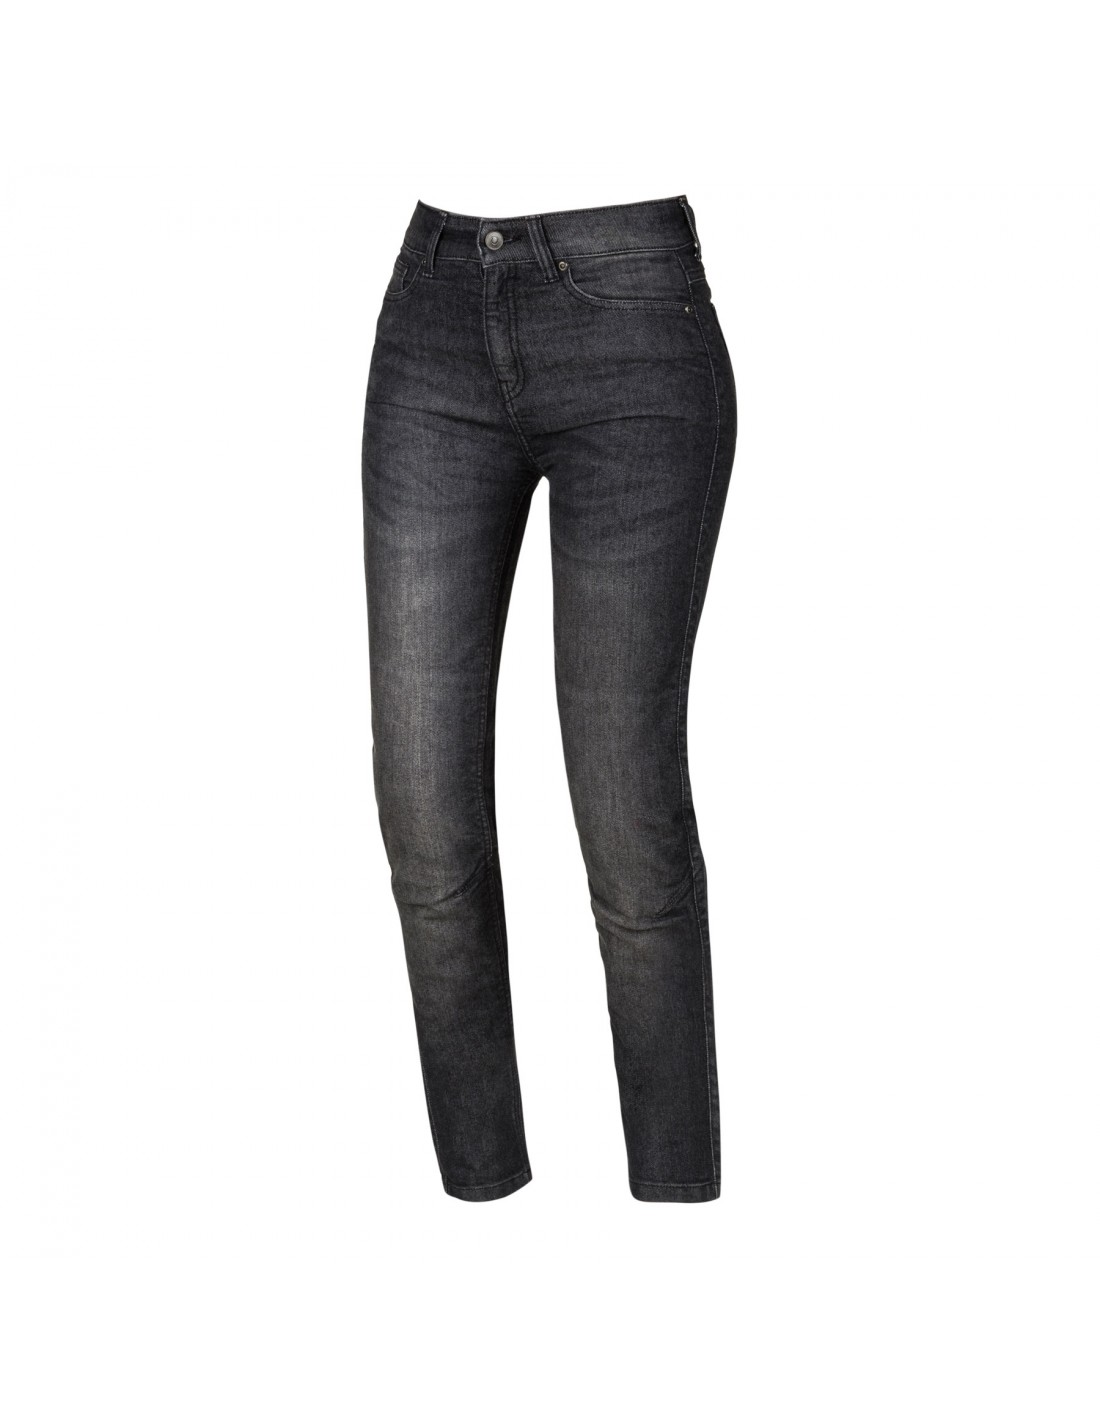 Spodnie Jeans SECA Delta One Lady Cordura Black